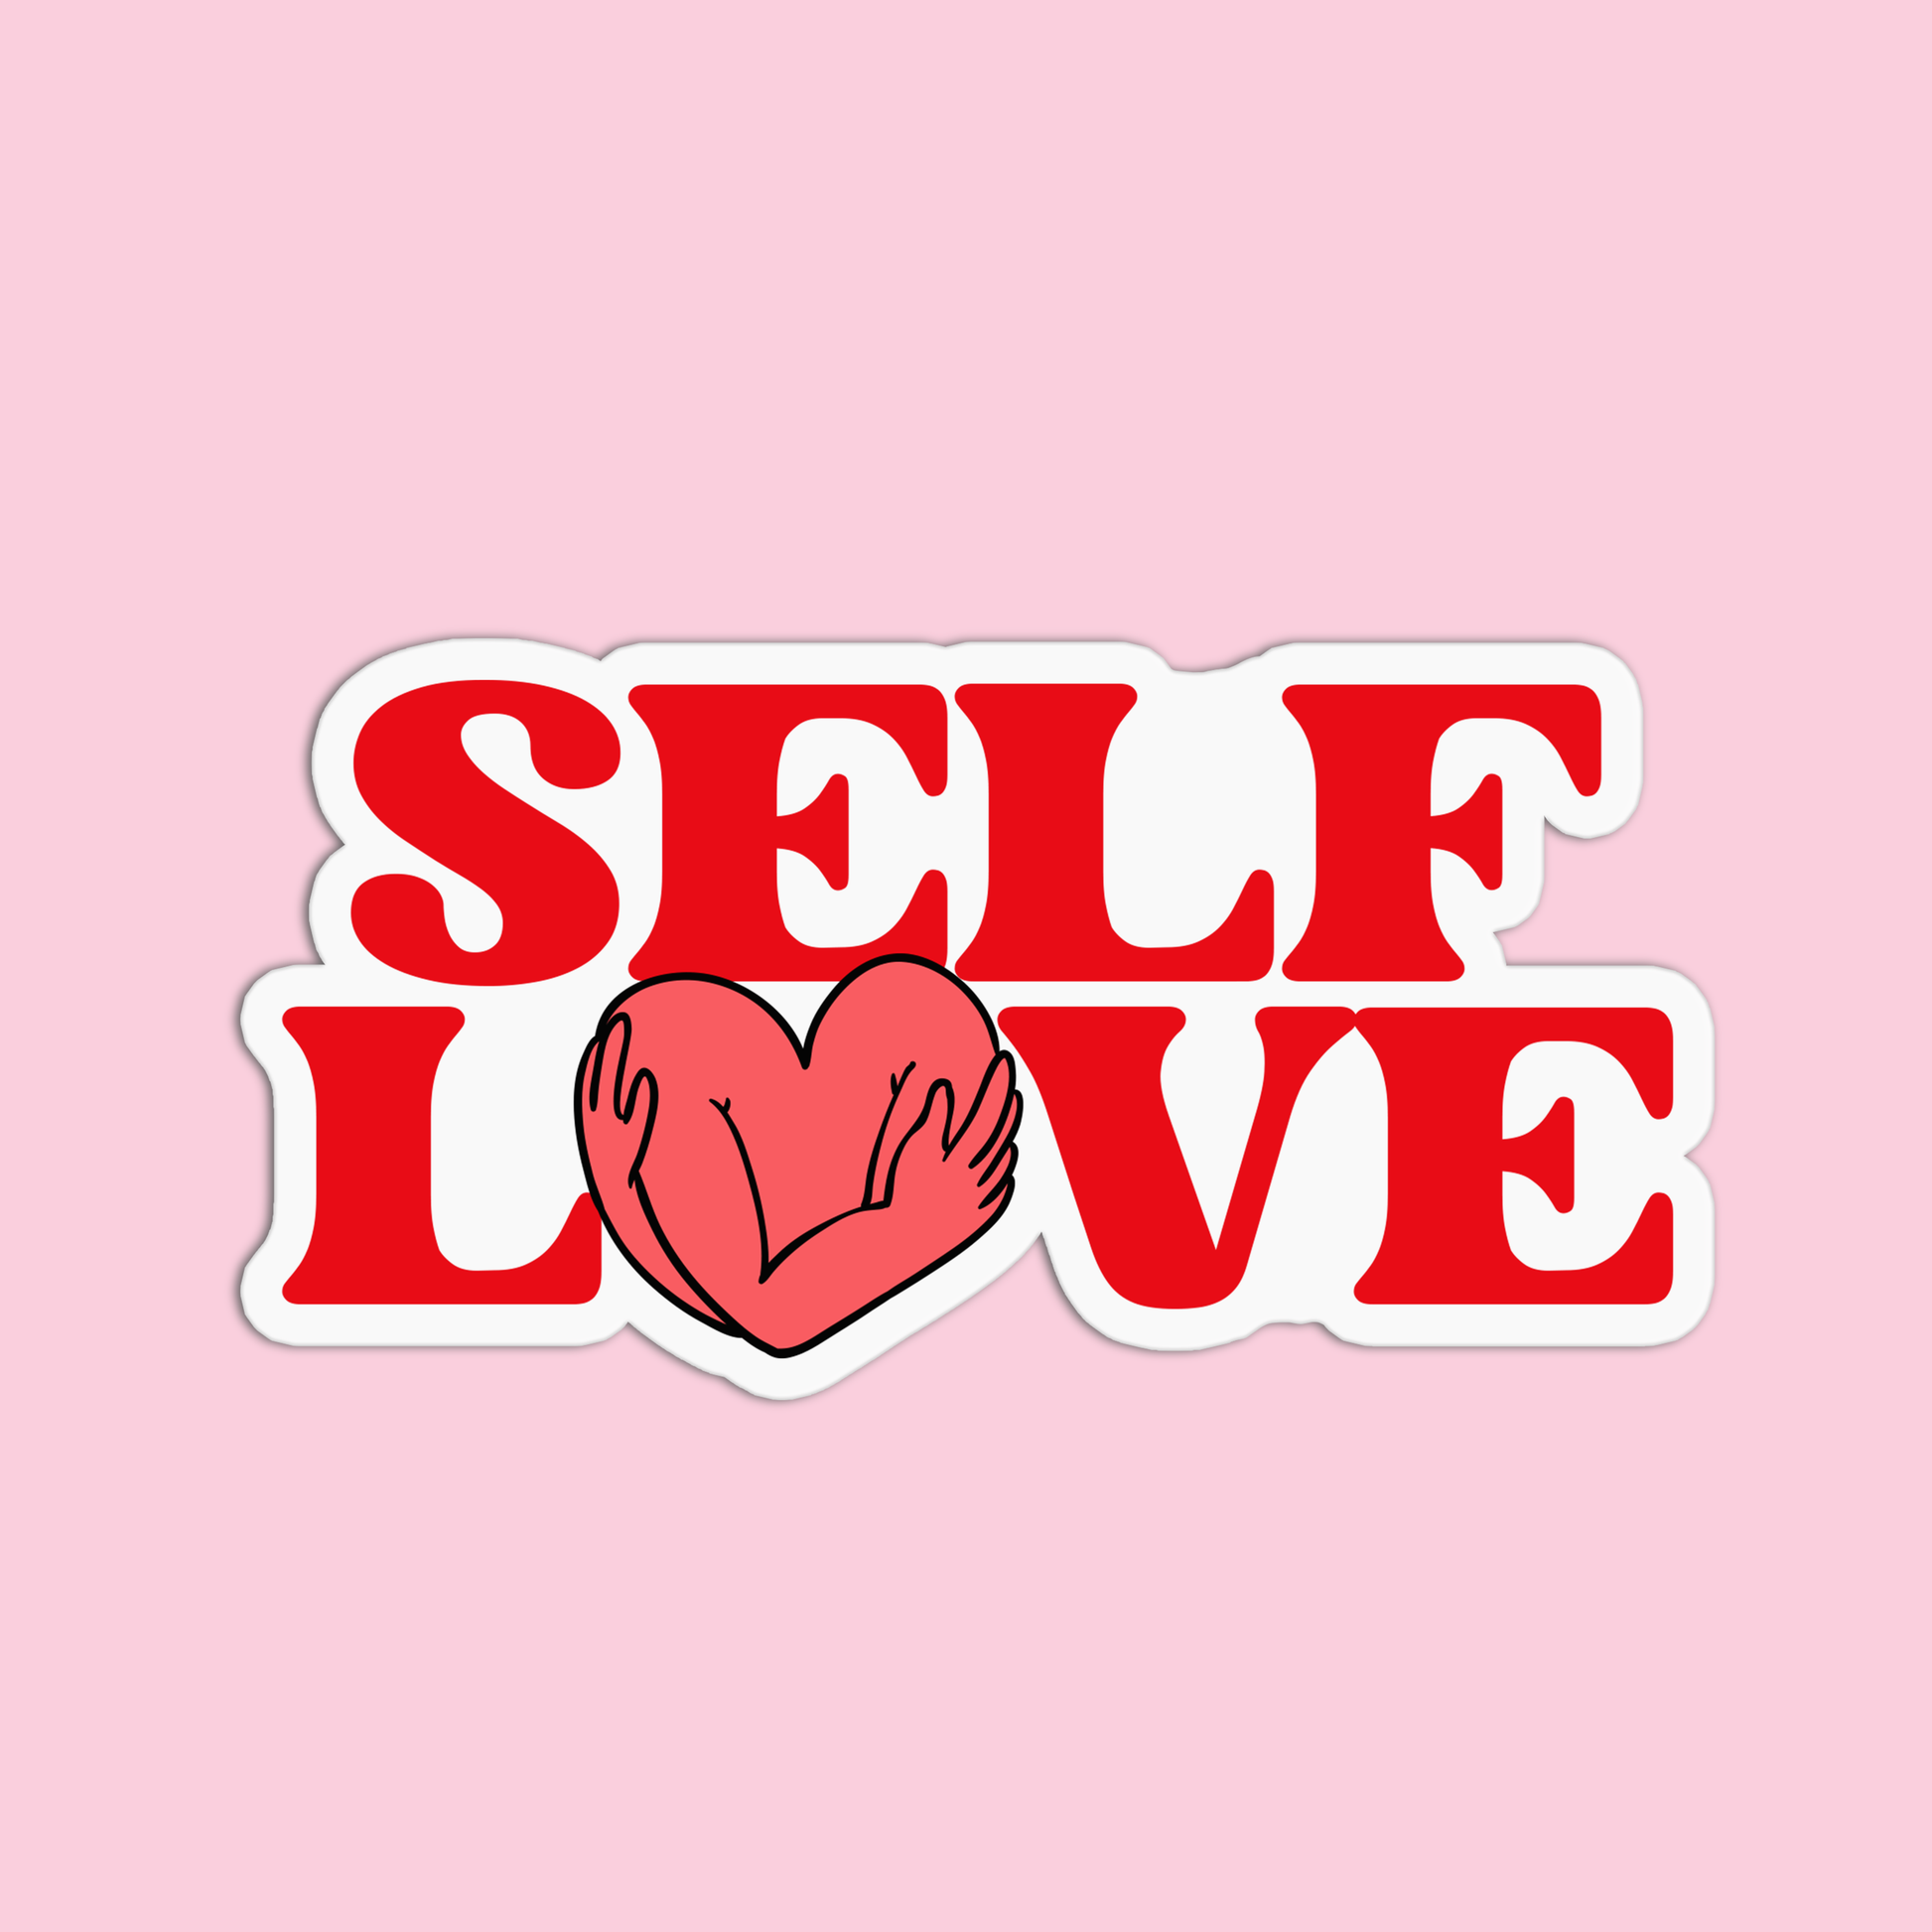  Self Love Stickers